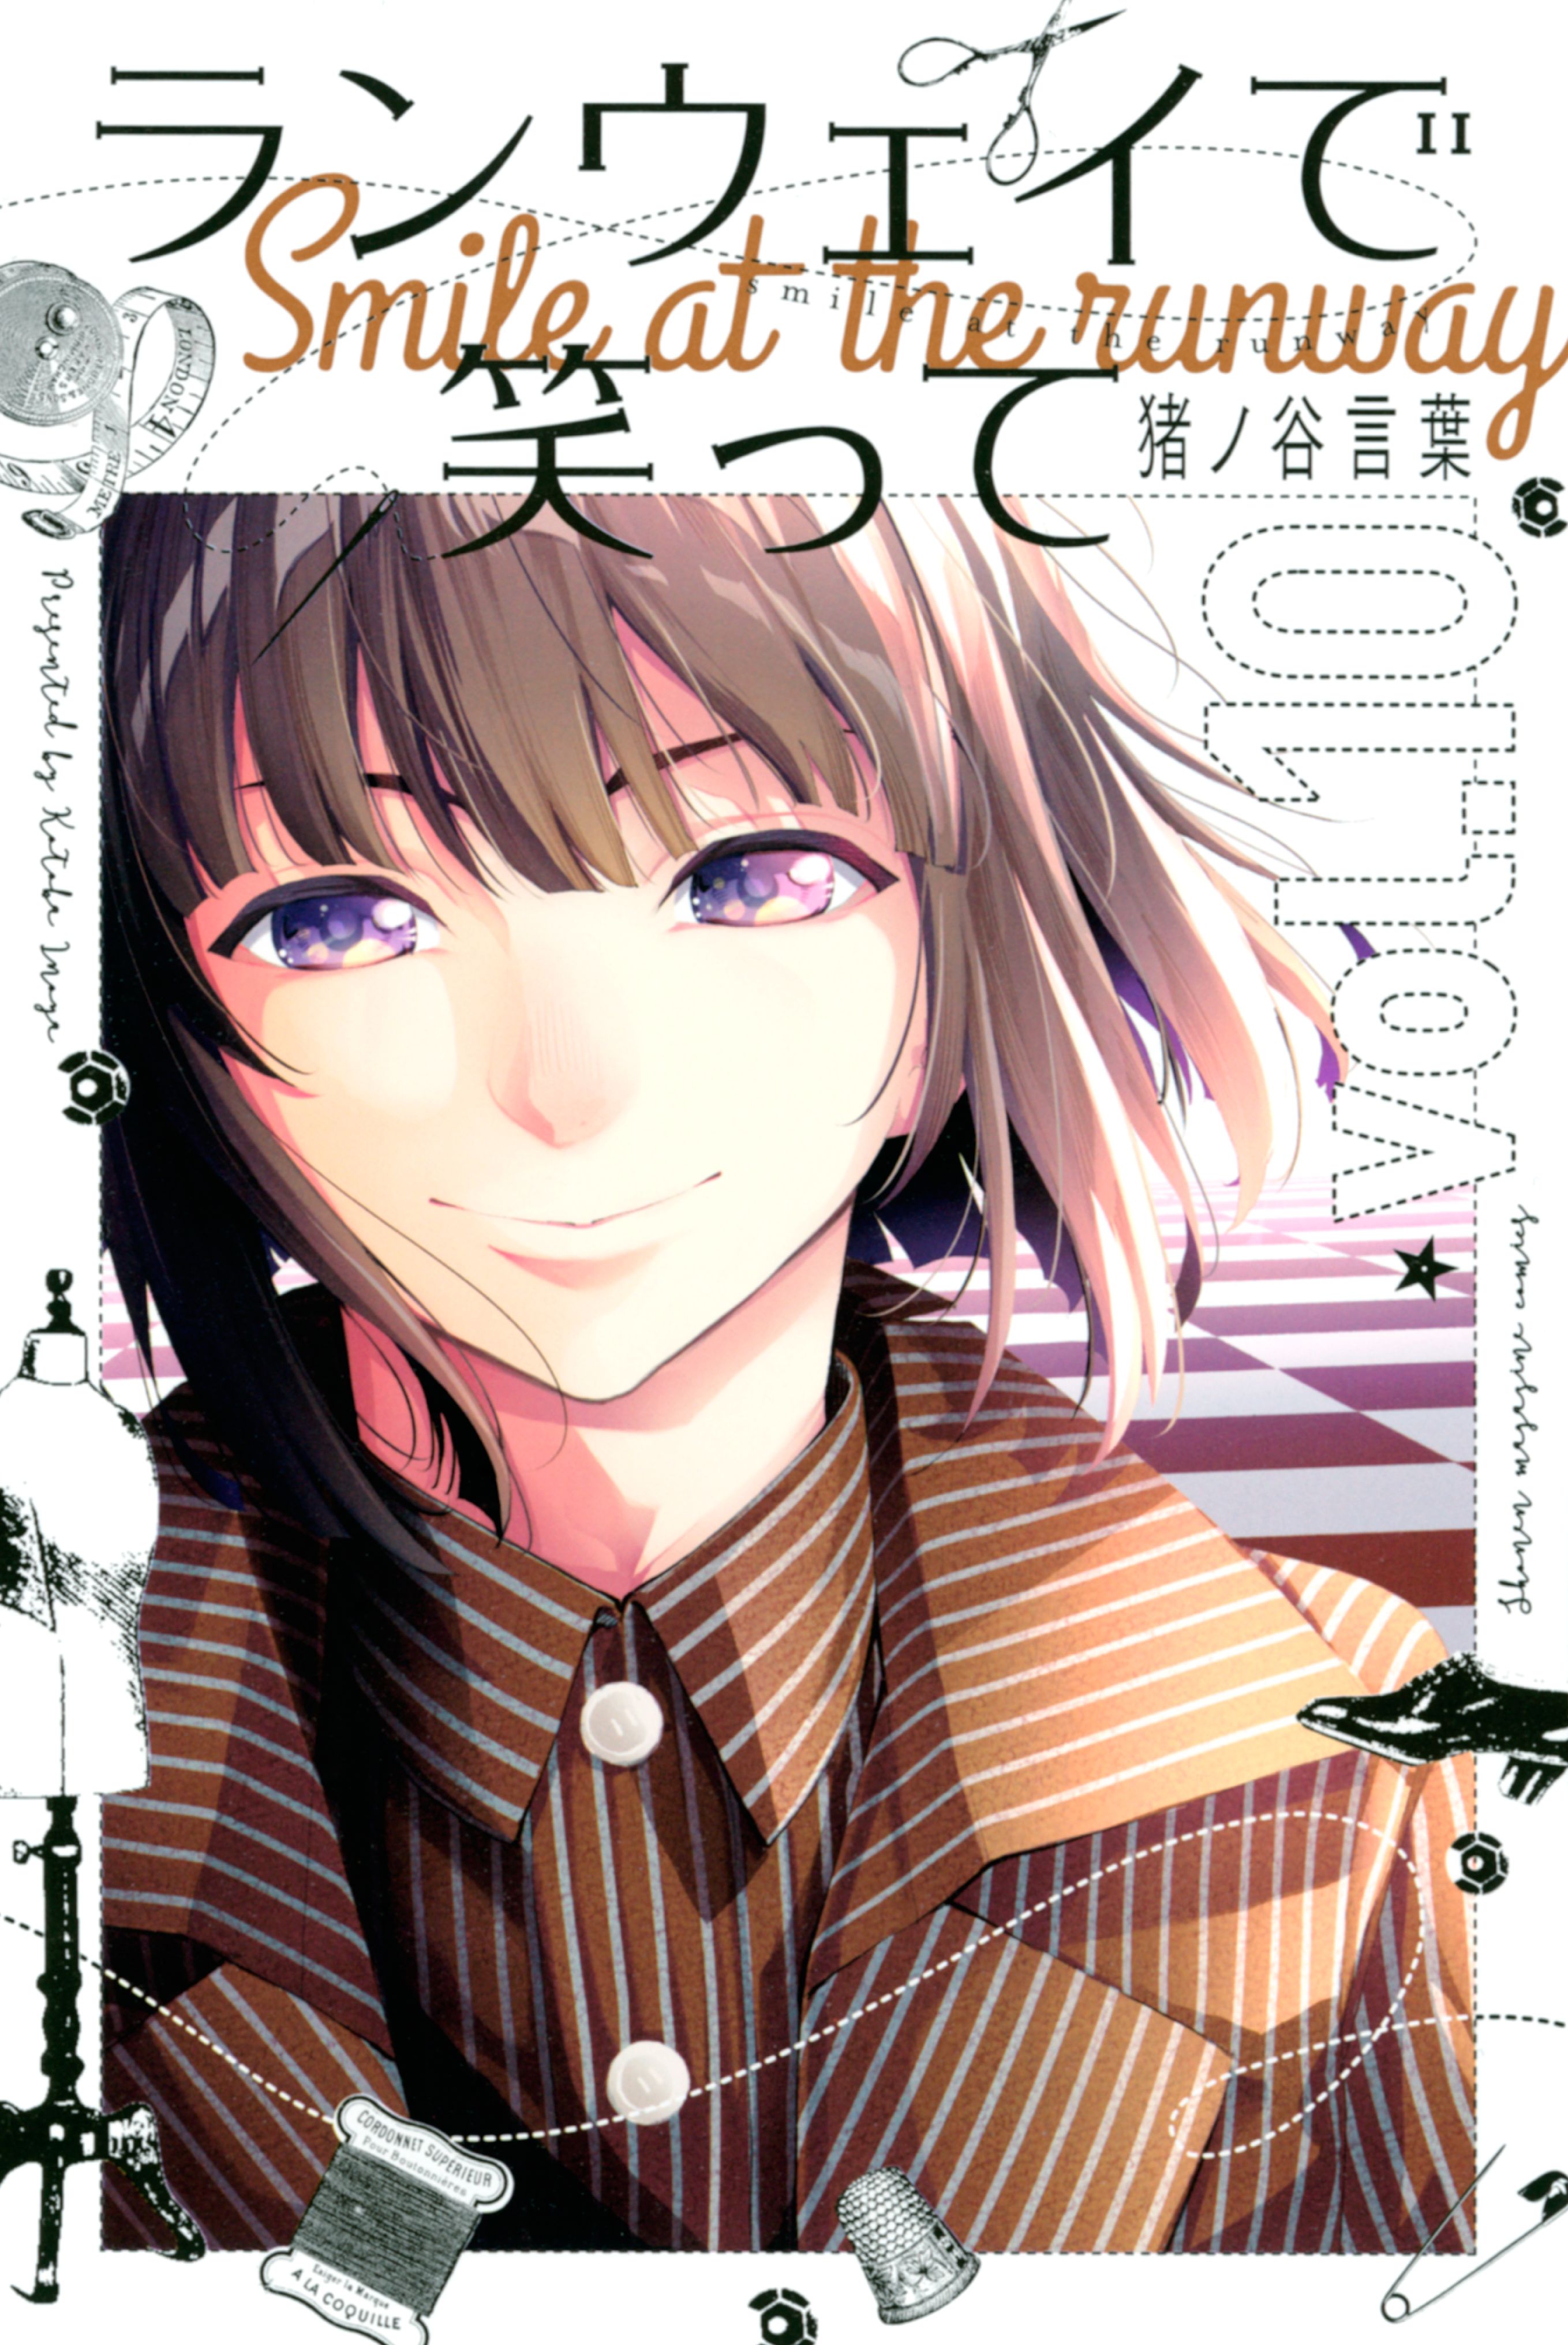 ART] Smile down the Runway Volume 19 cover : r/manga